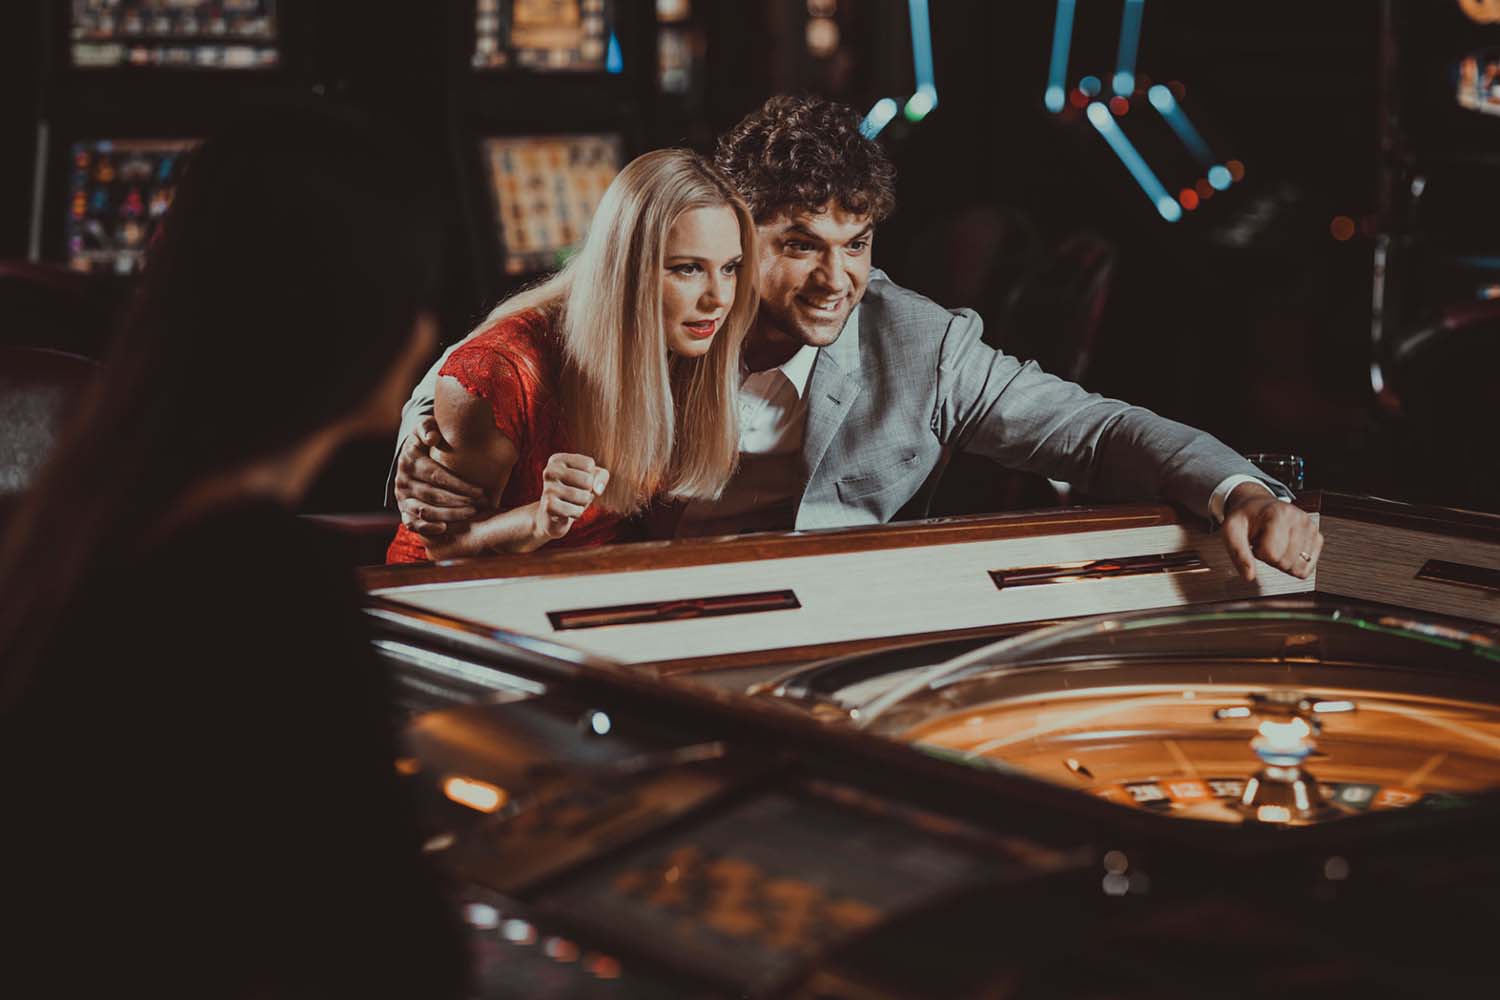 Play Casino Games in UK Online Casinos for £5 Minimum Deposit